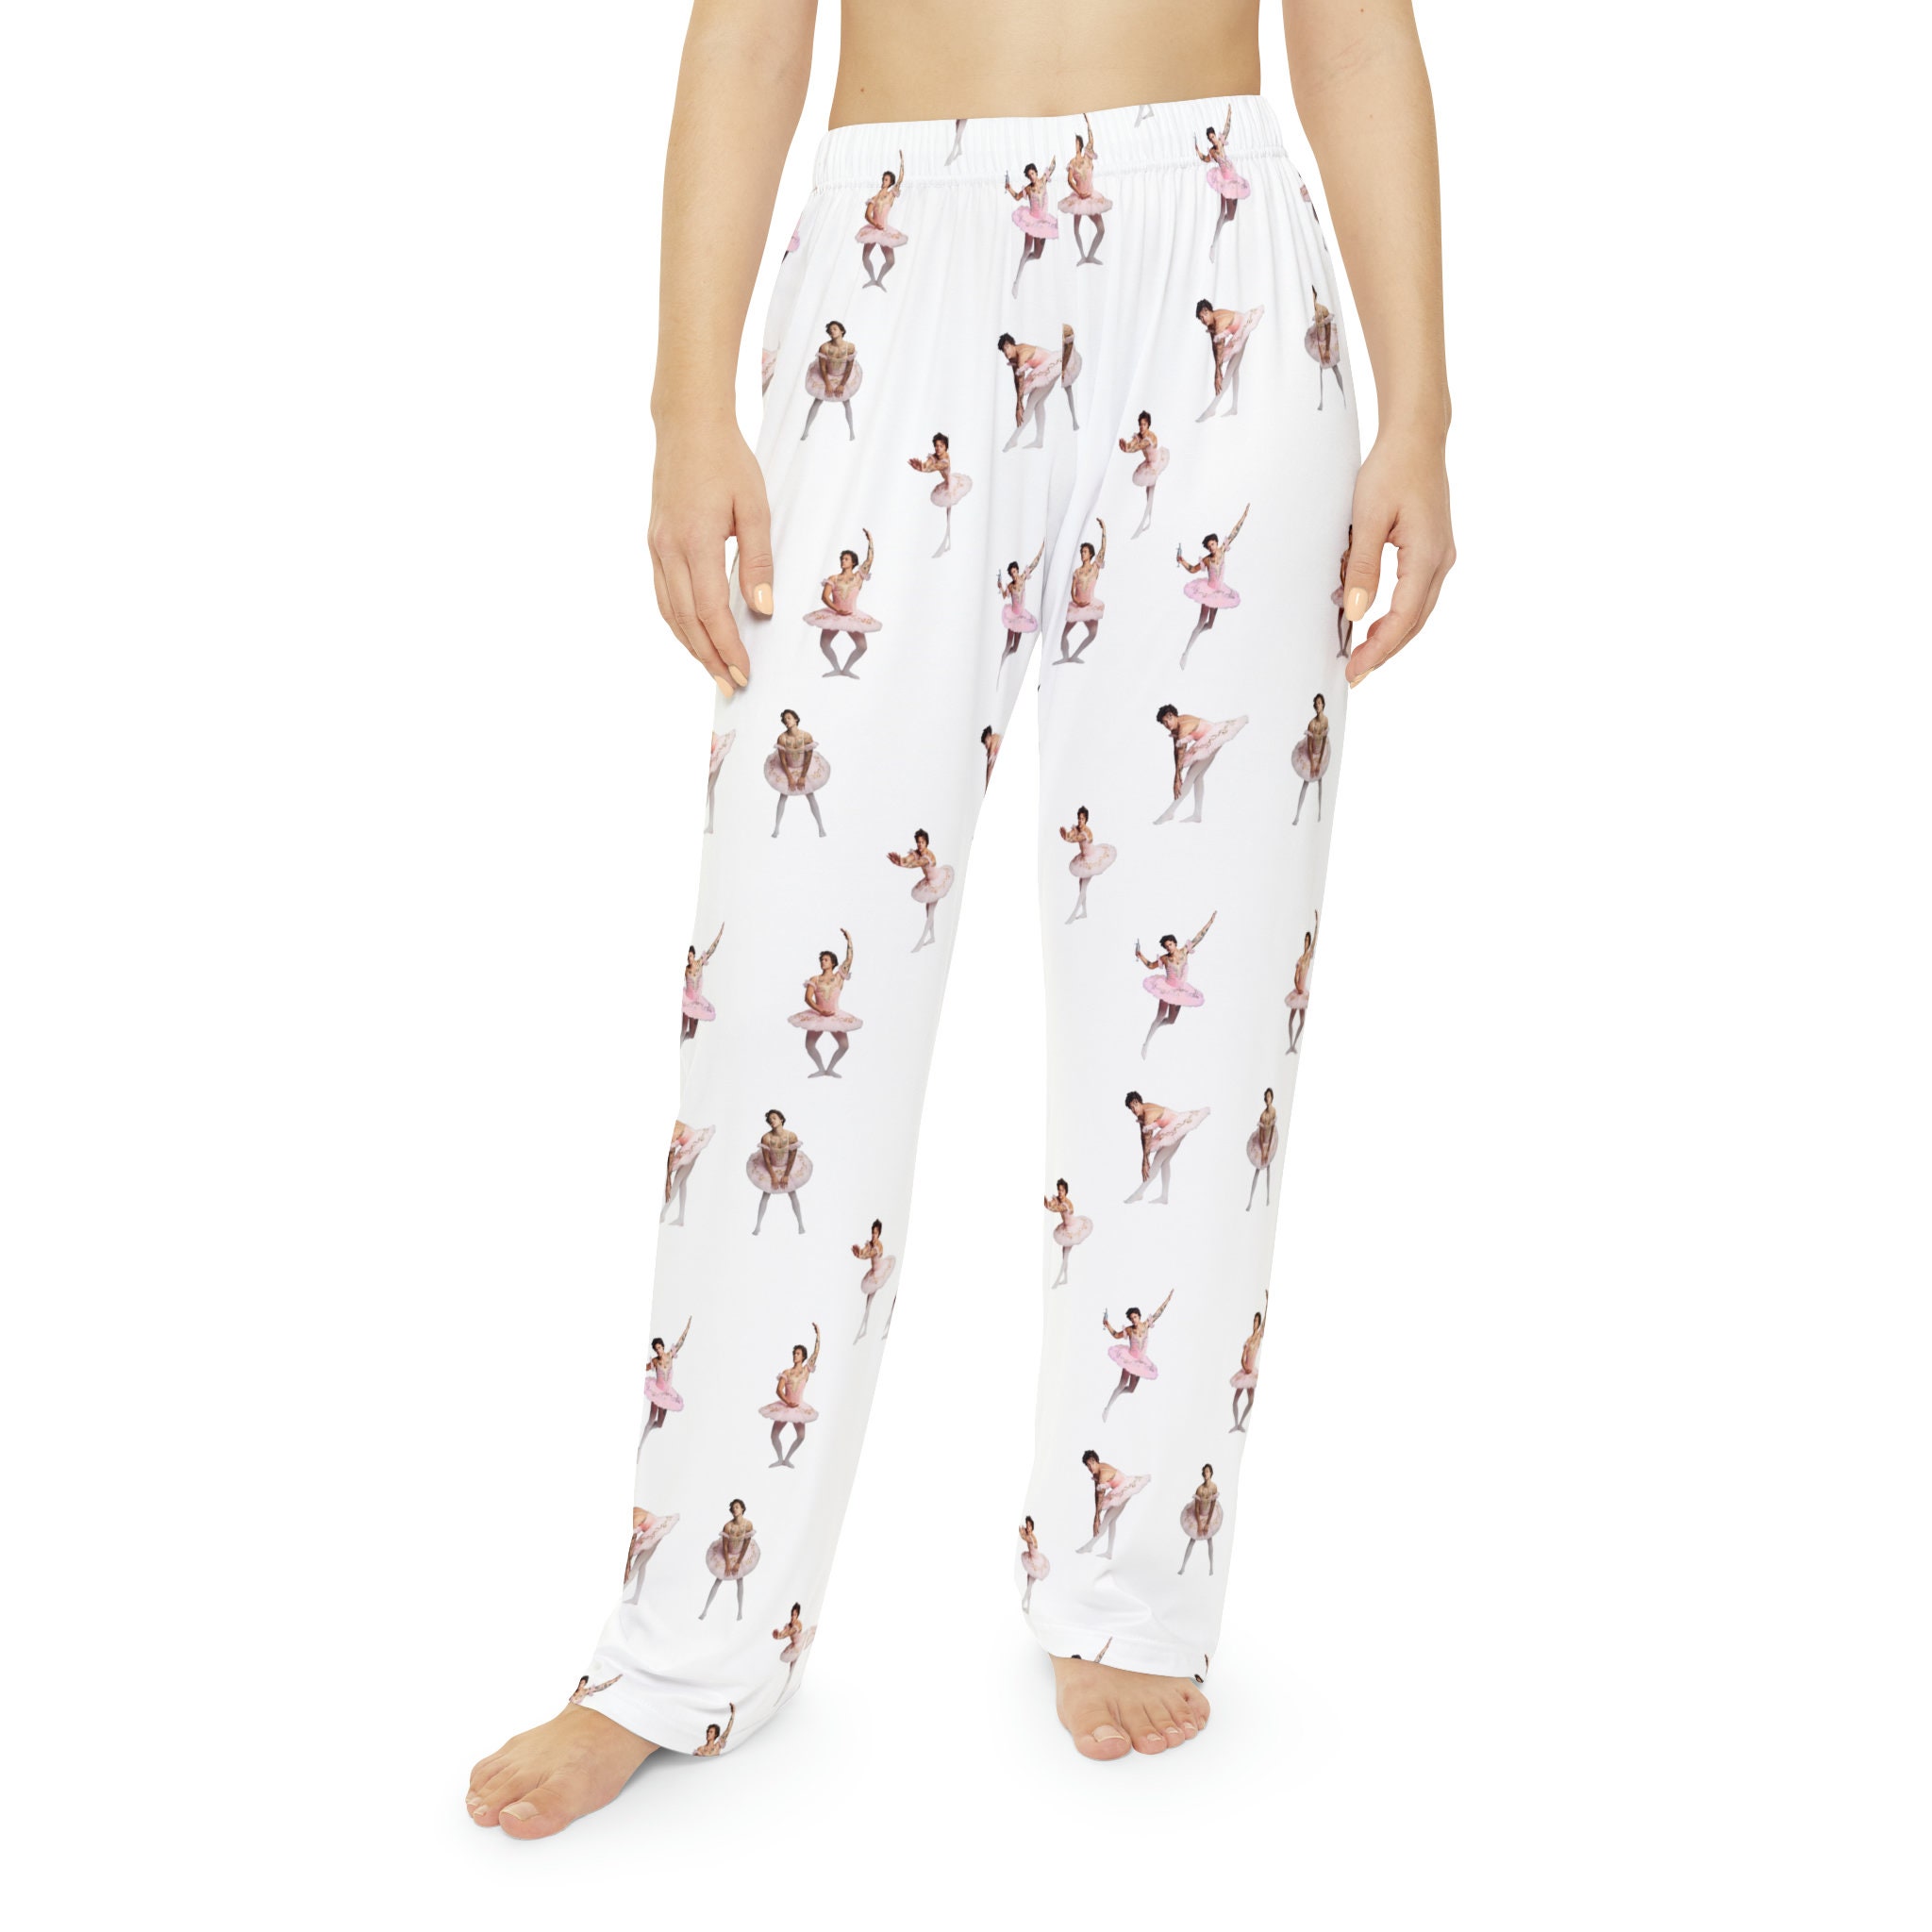 Buy Louis Tomlinson Pajama Pants Online in India 